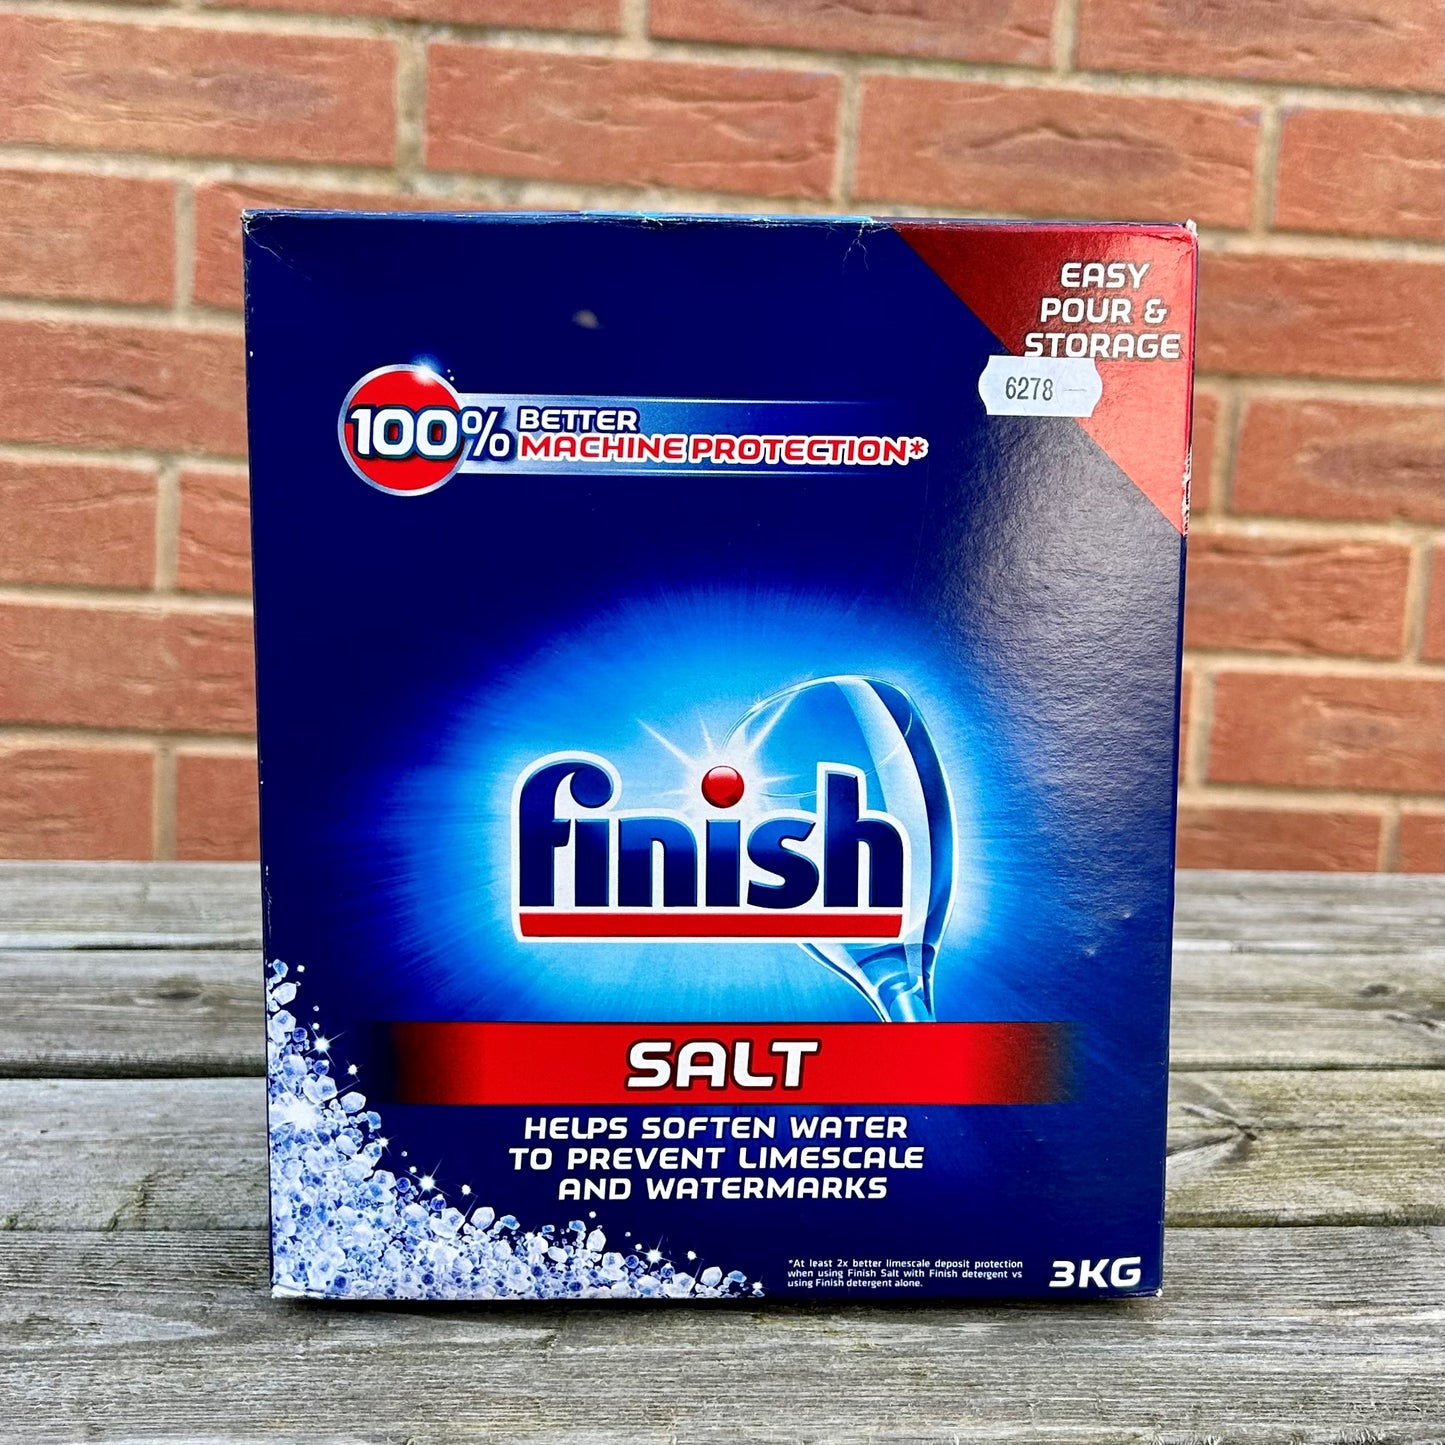 Finish Dishwasher Salt